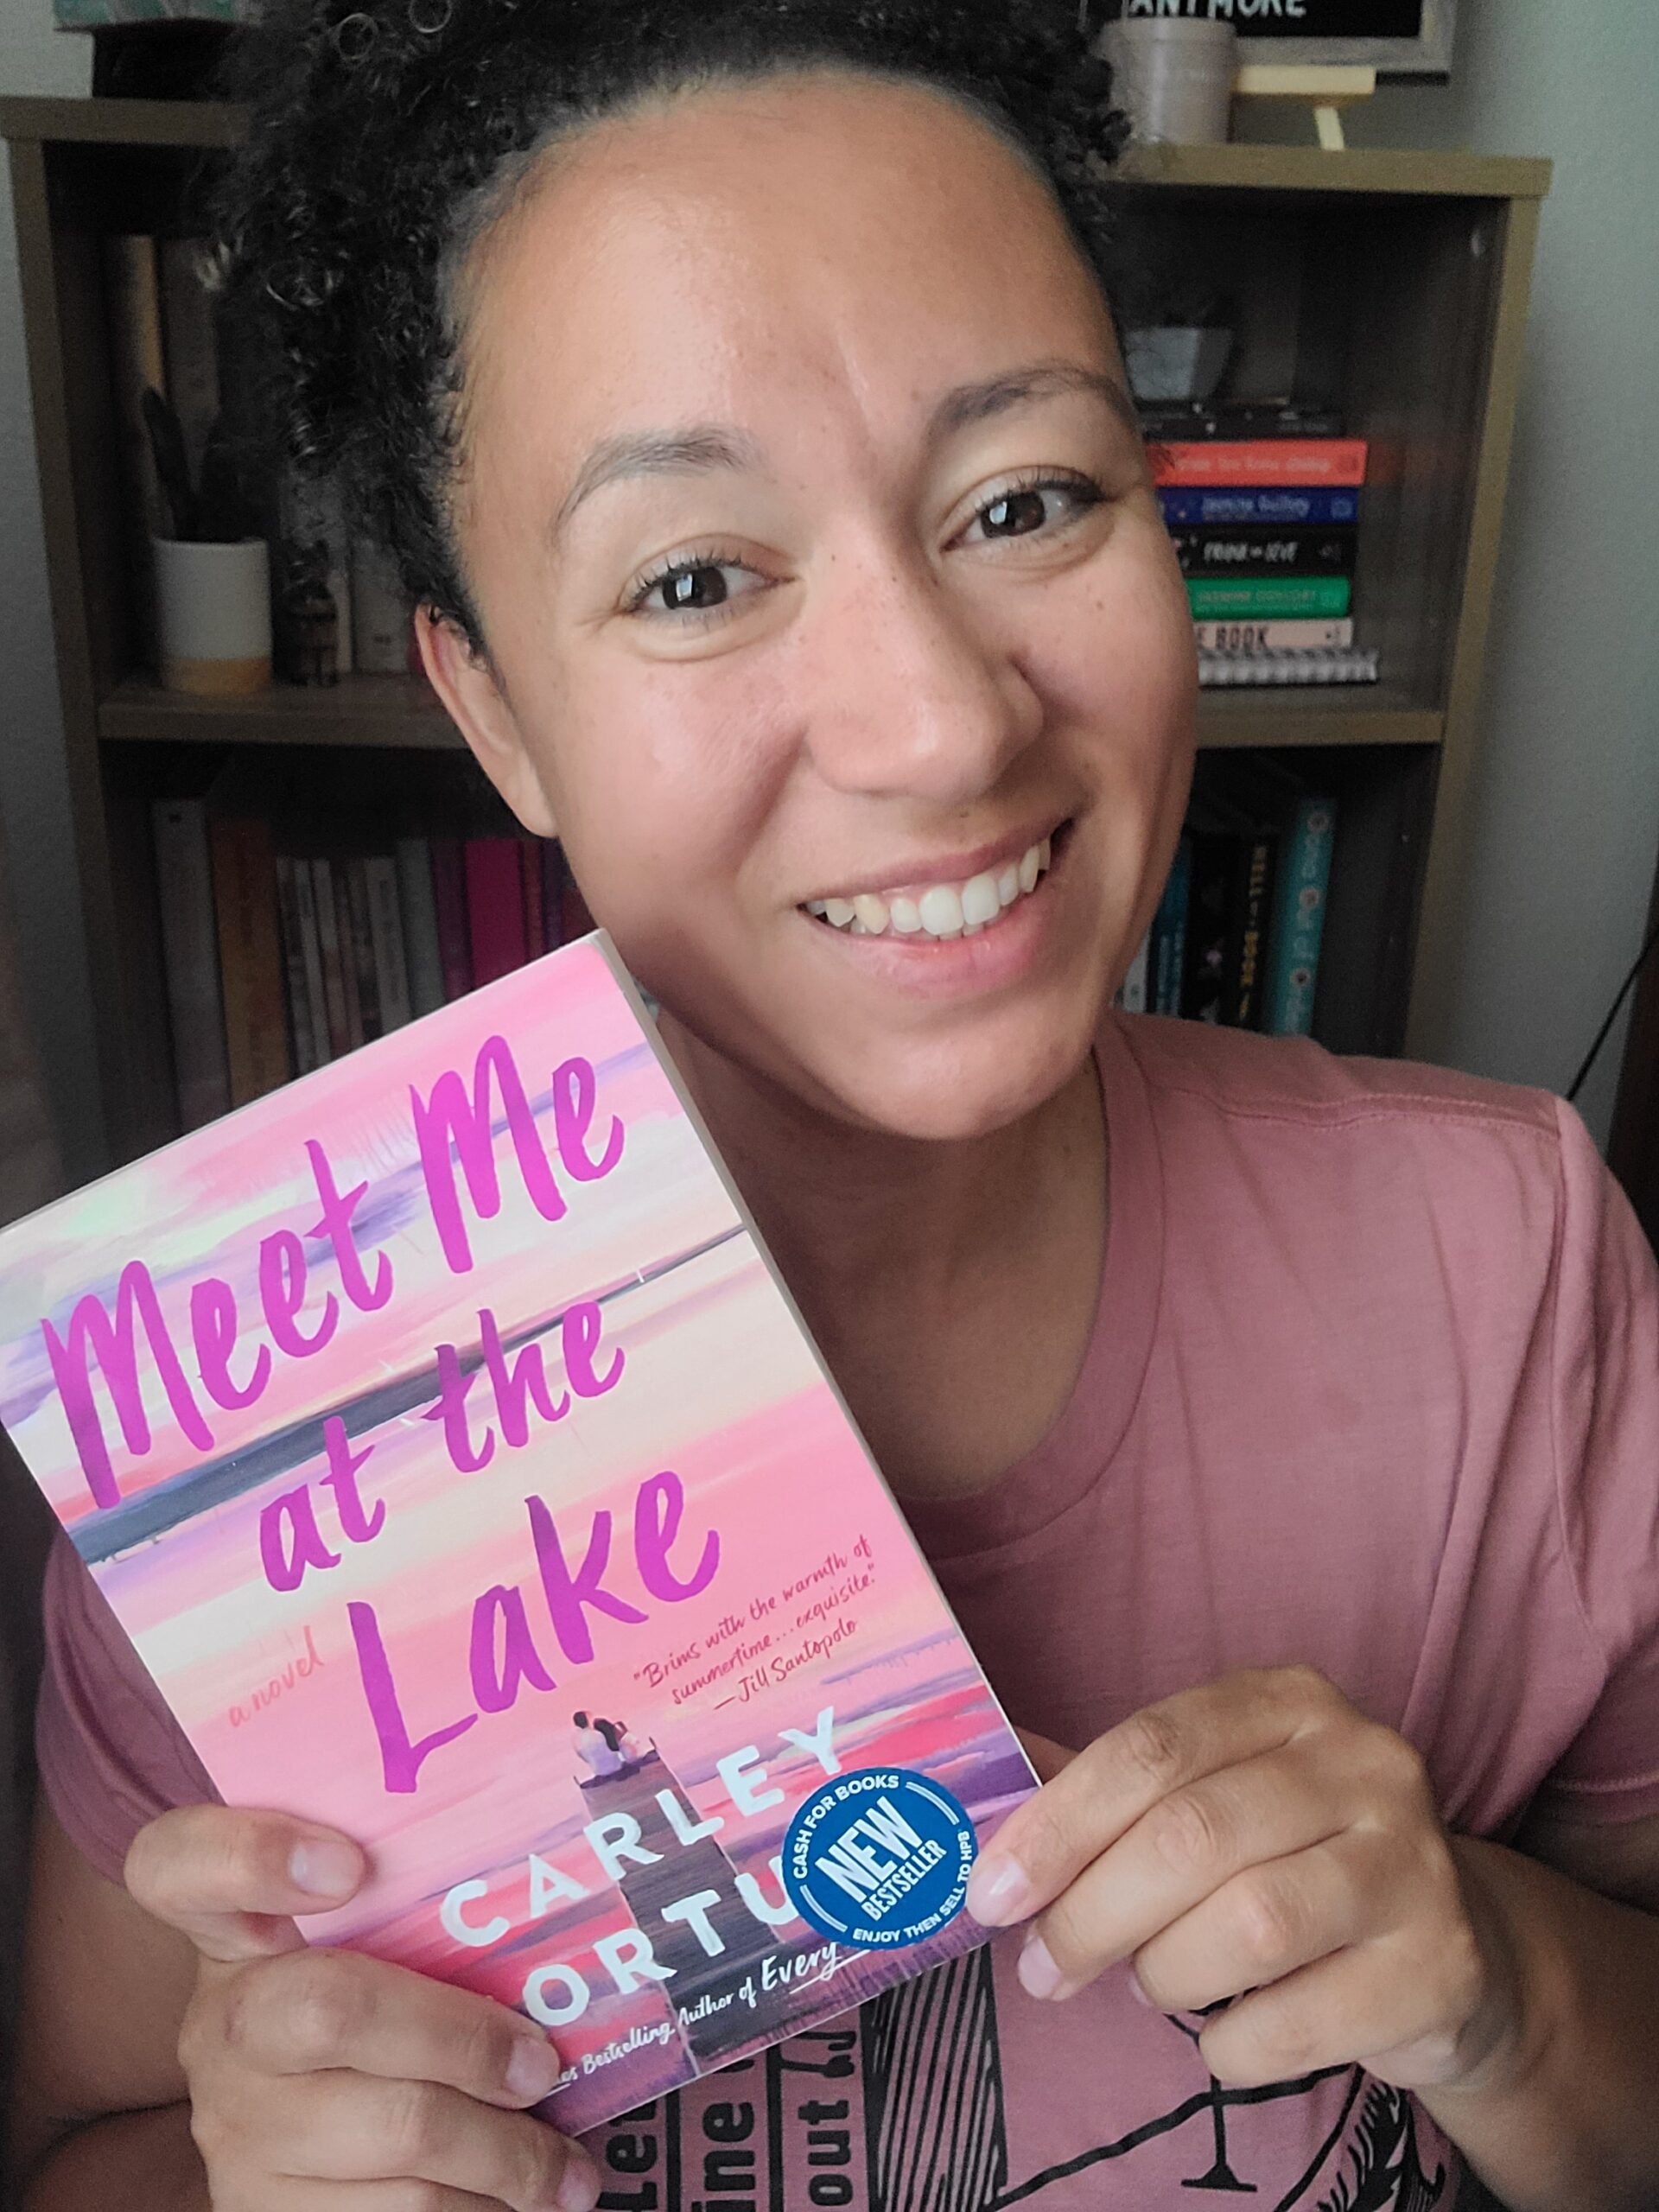 meet me at the lake